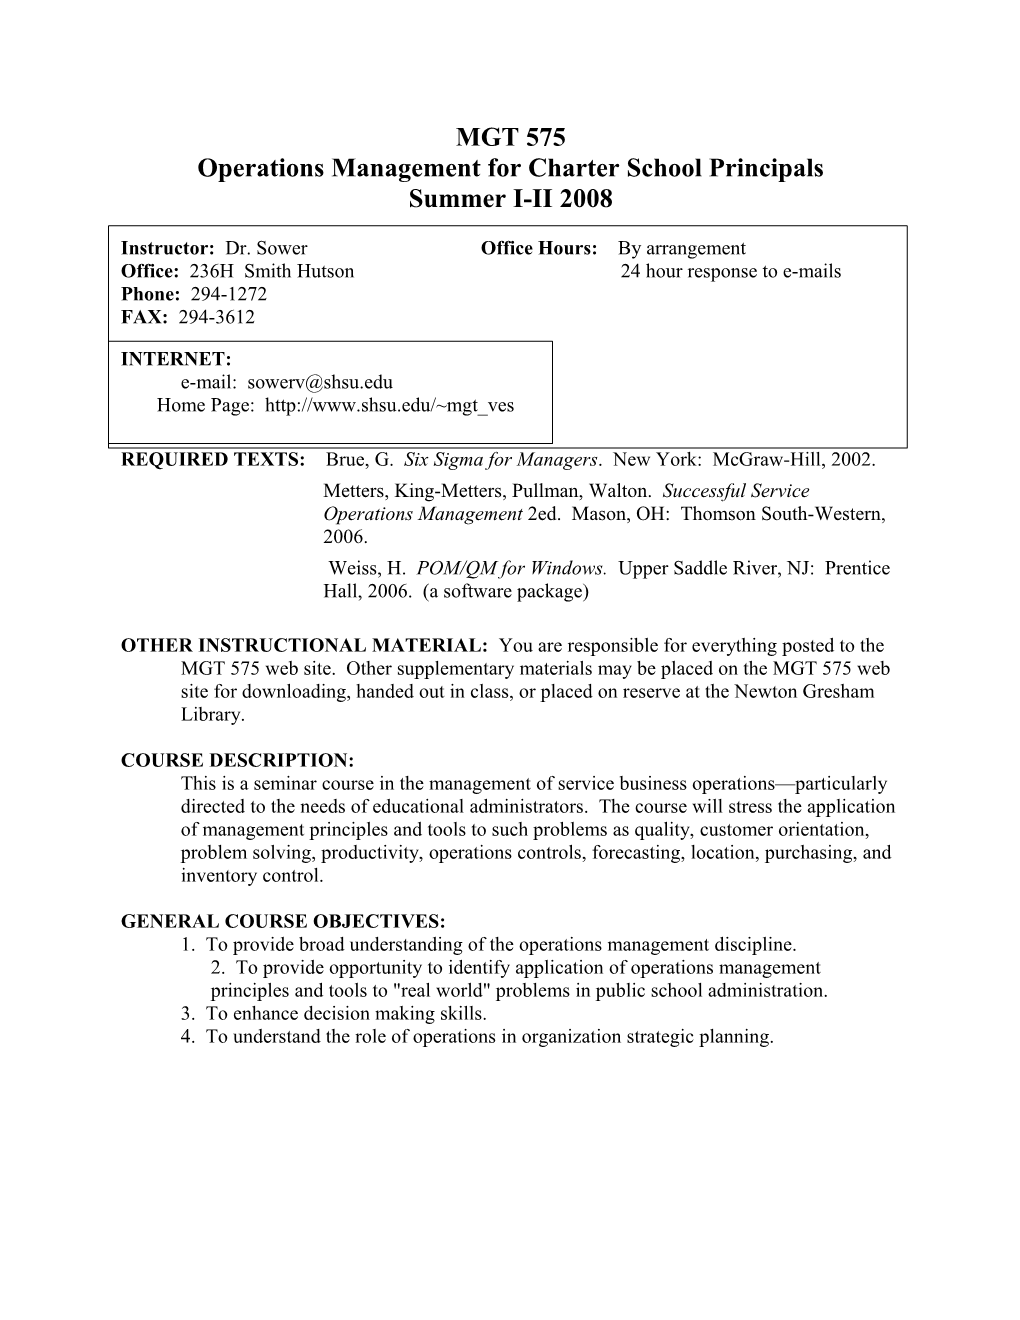 Operations Management for Charterschoolprincipals